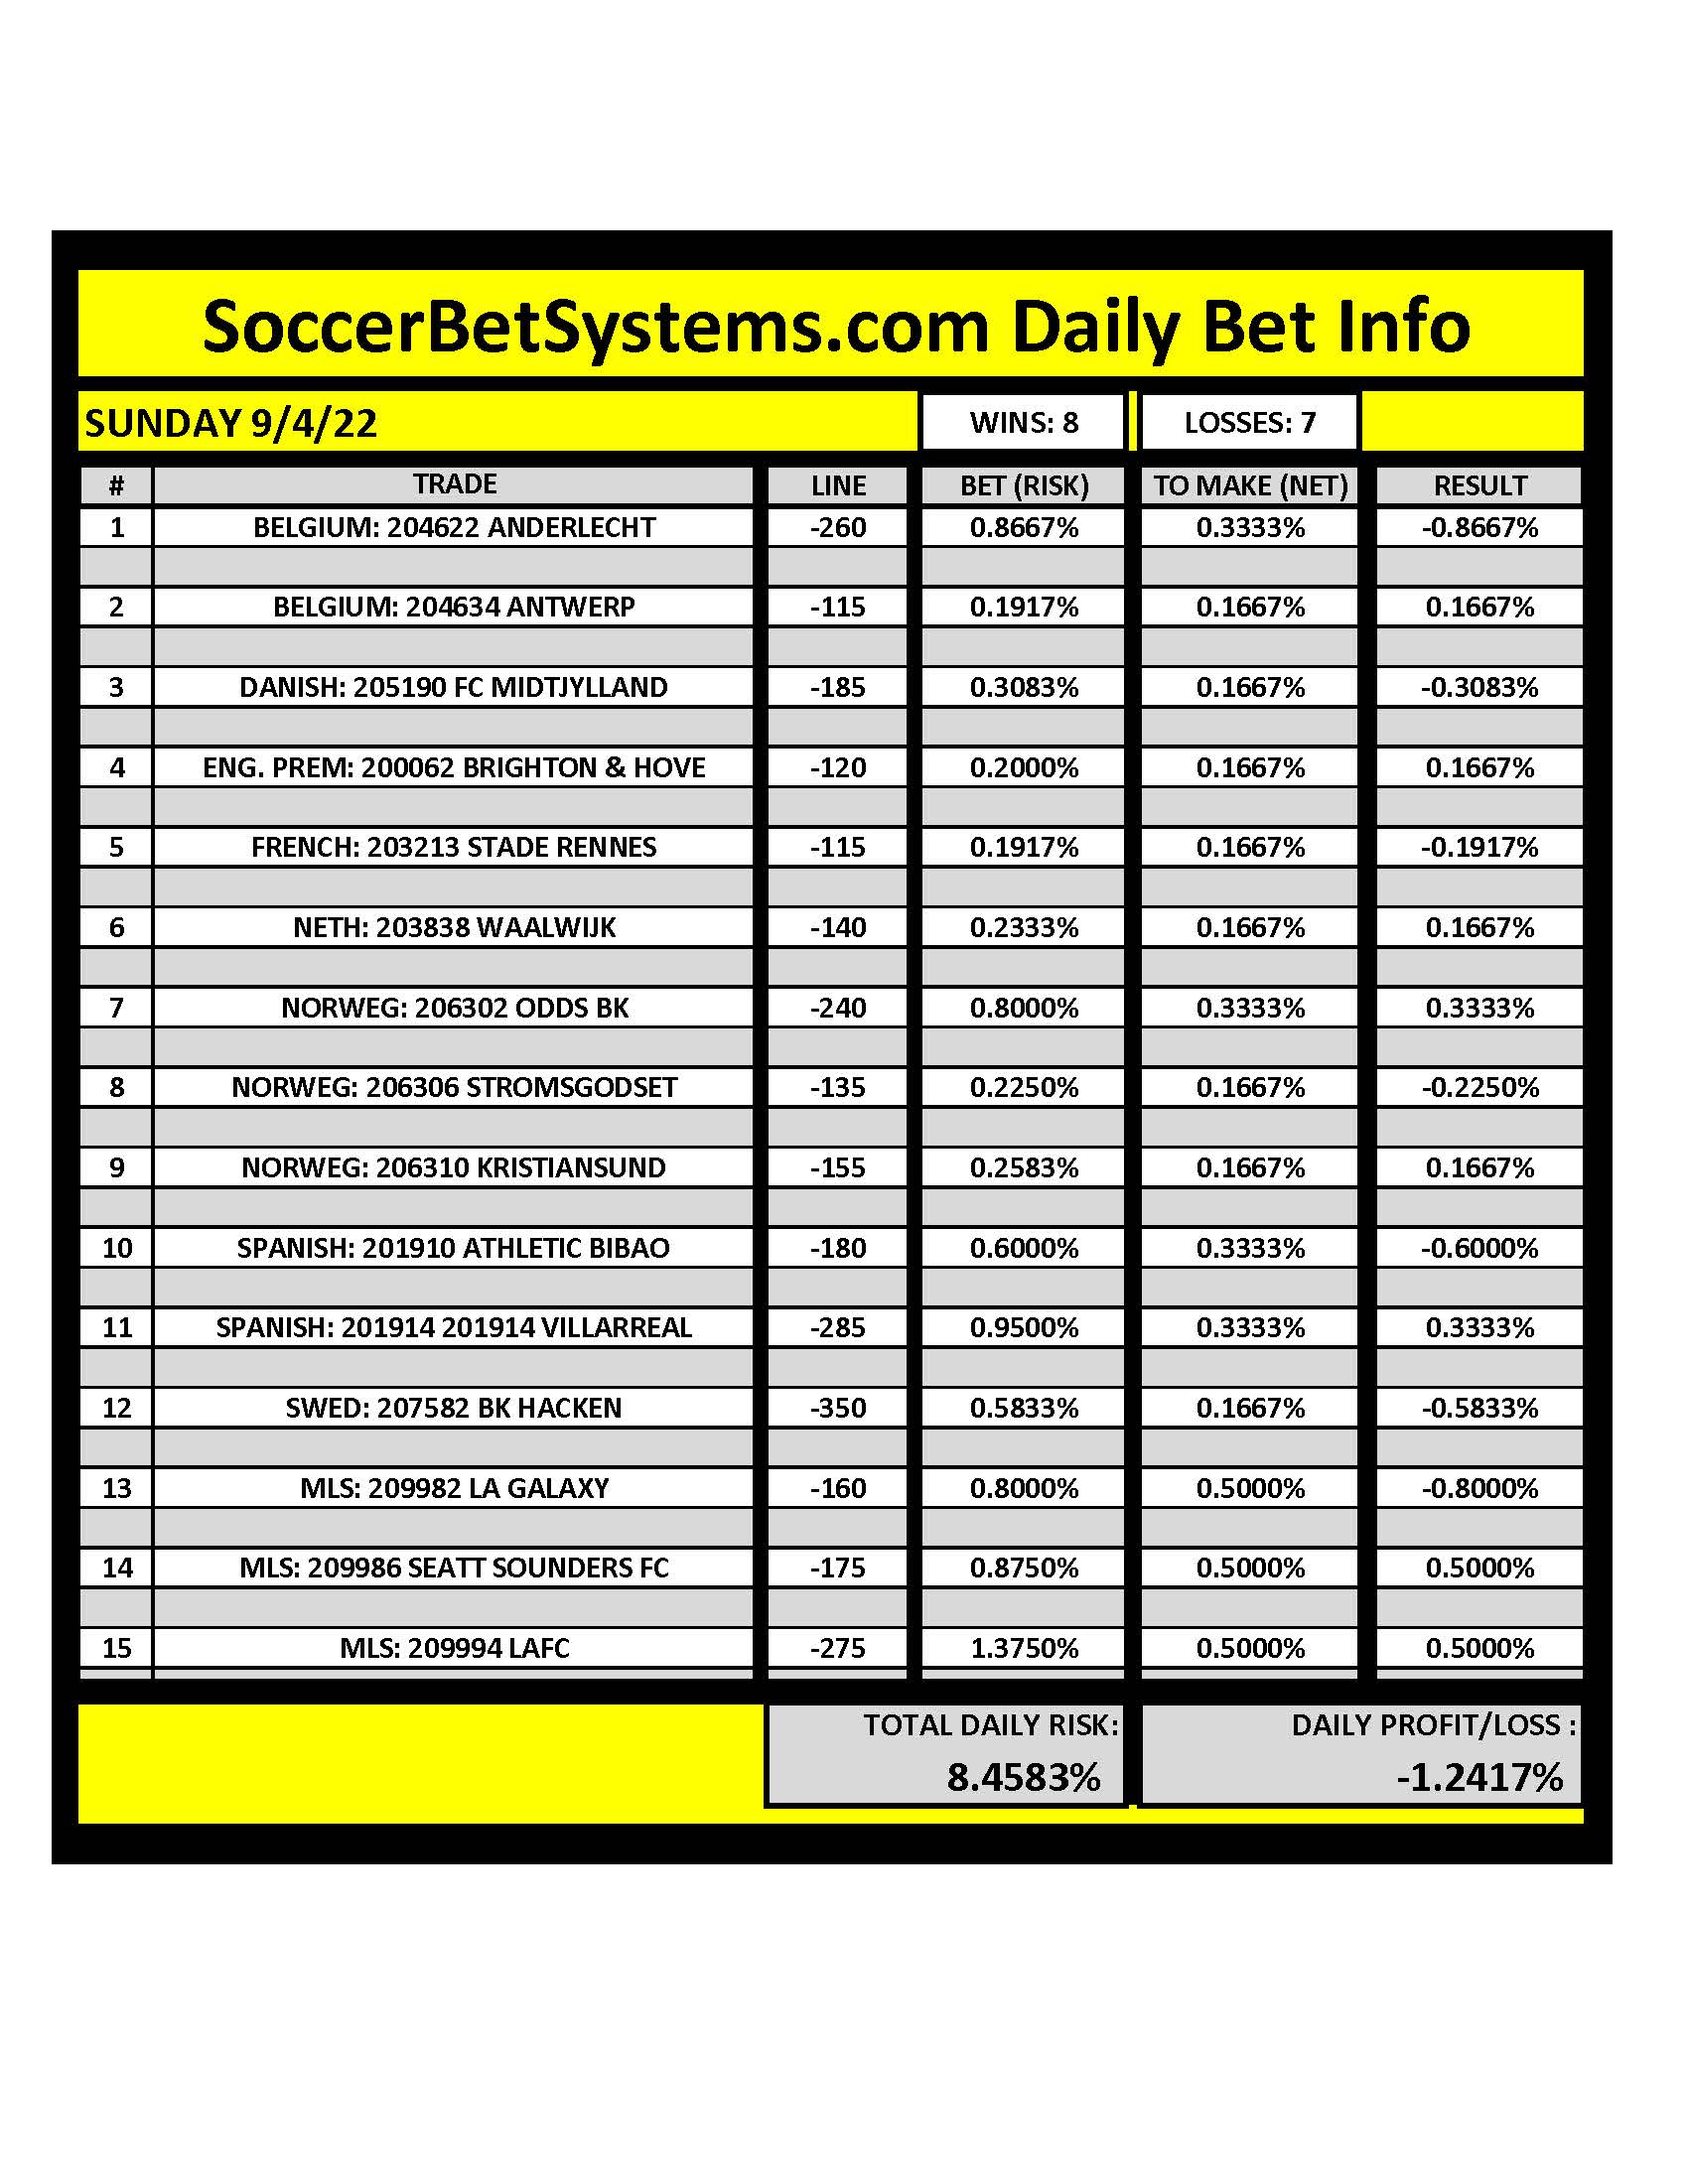 SoccerBetSystems.com 9/4/22 Daily Results